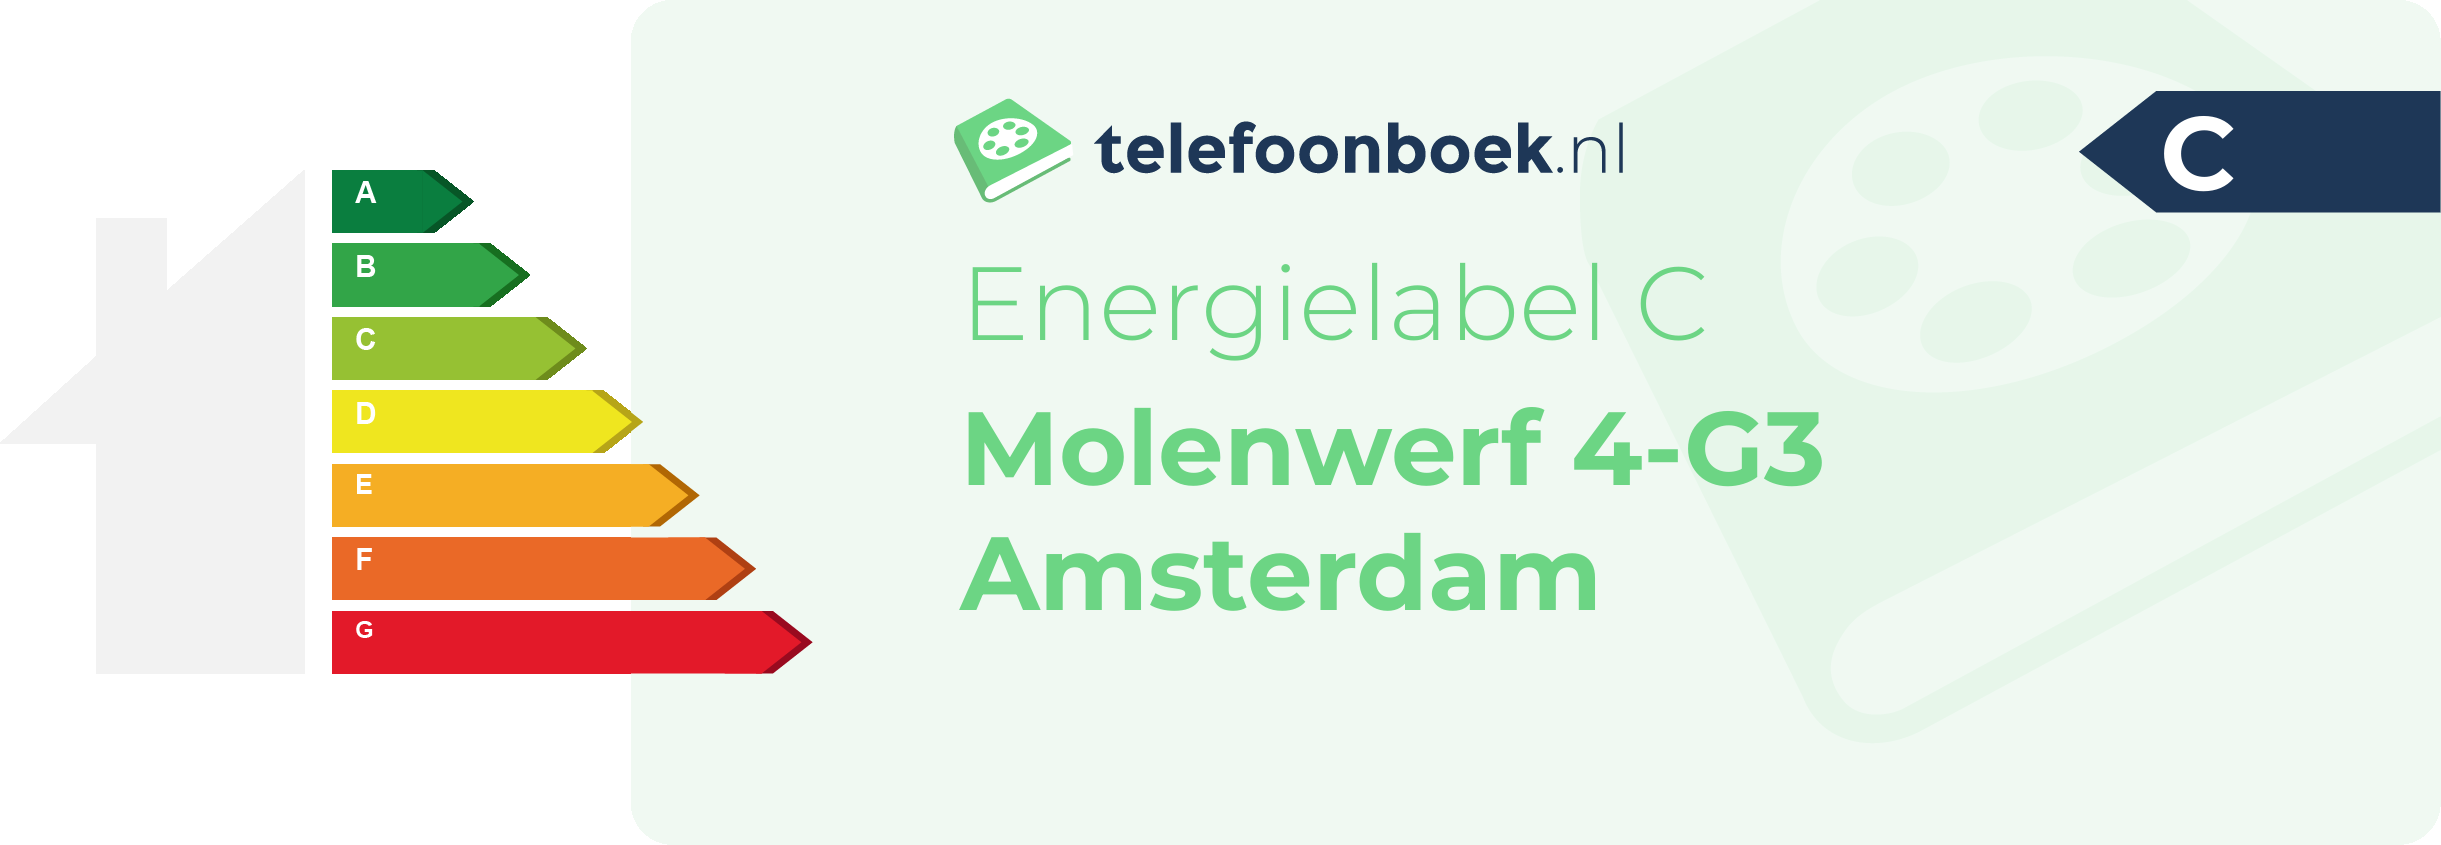 Energielabel Molenwerf 4-G3 Amsterdam